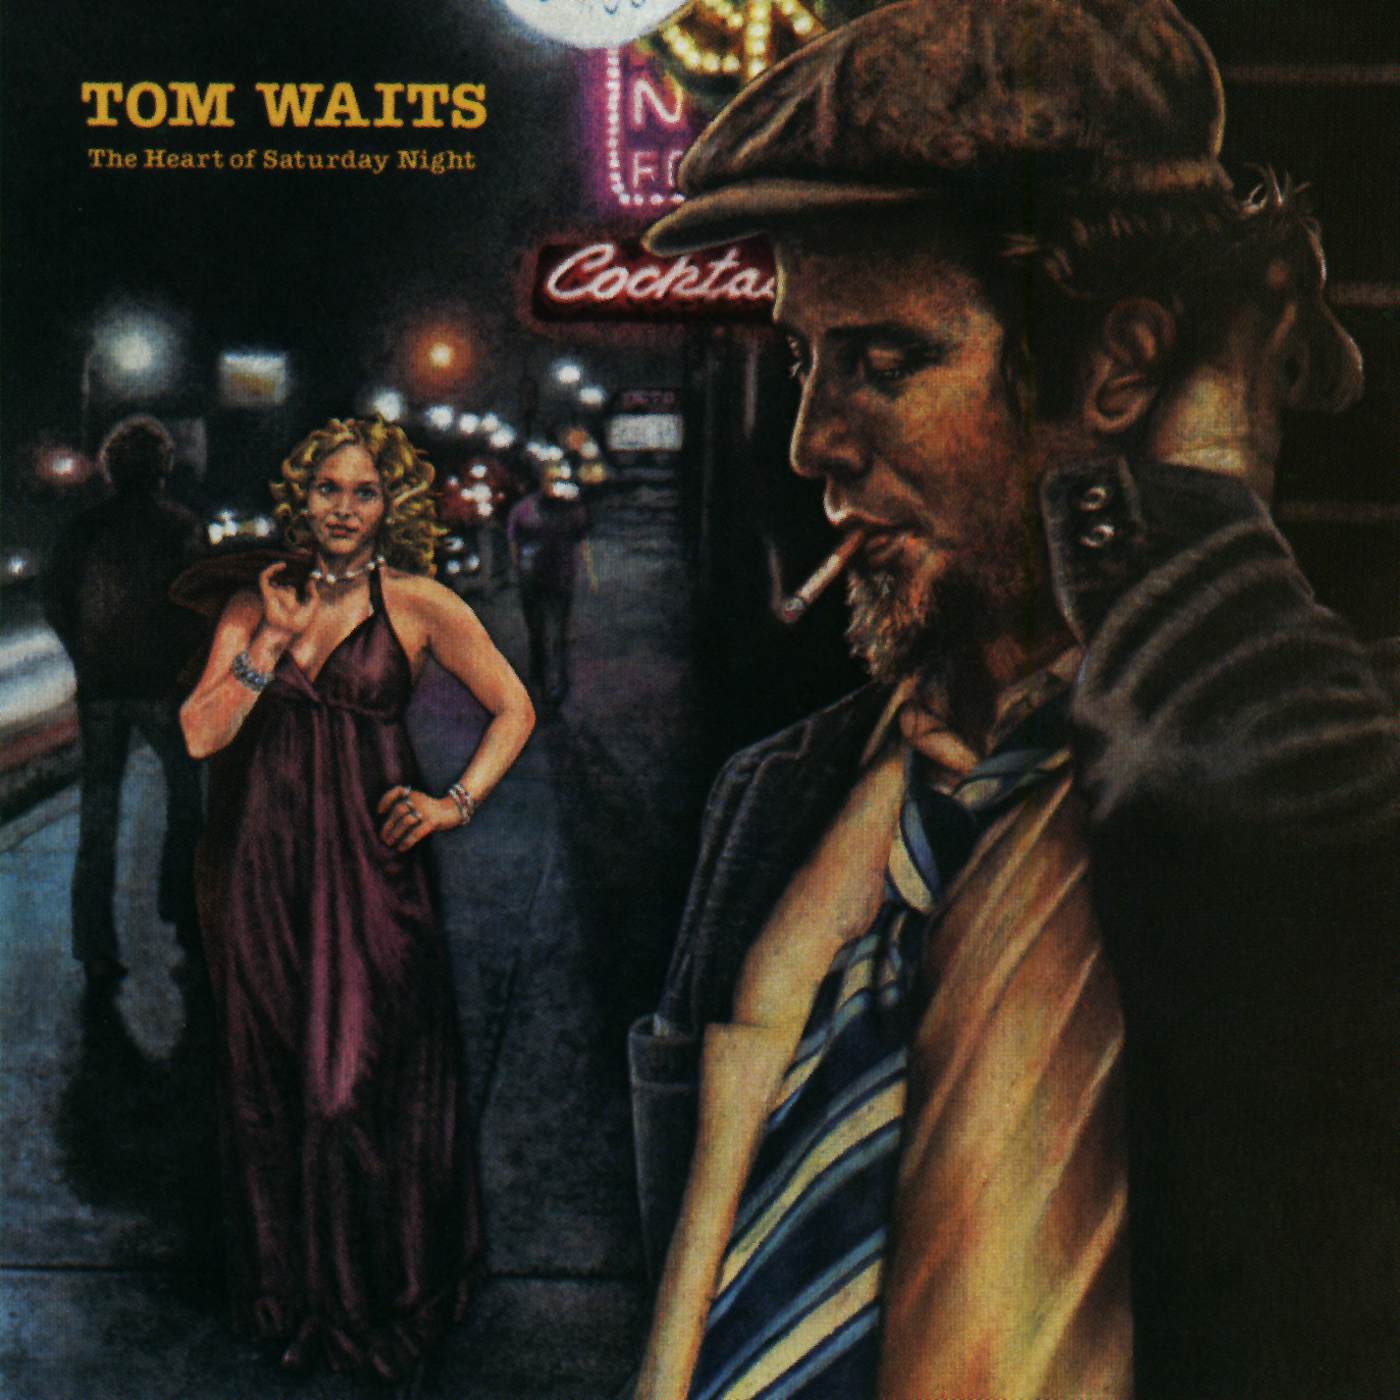 Tom Waits HEART OF SATURDAY NIGHT Vinyl Record